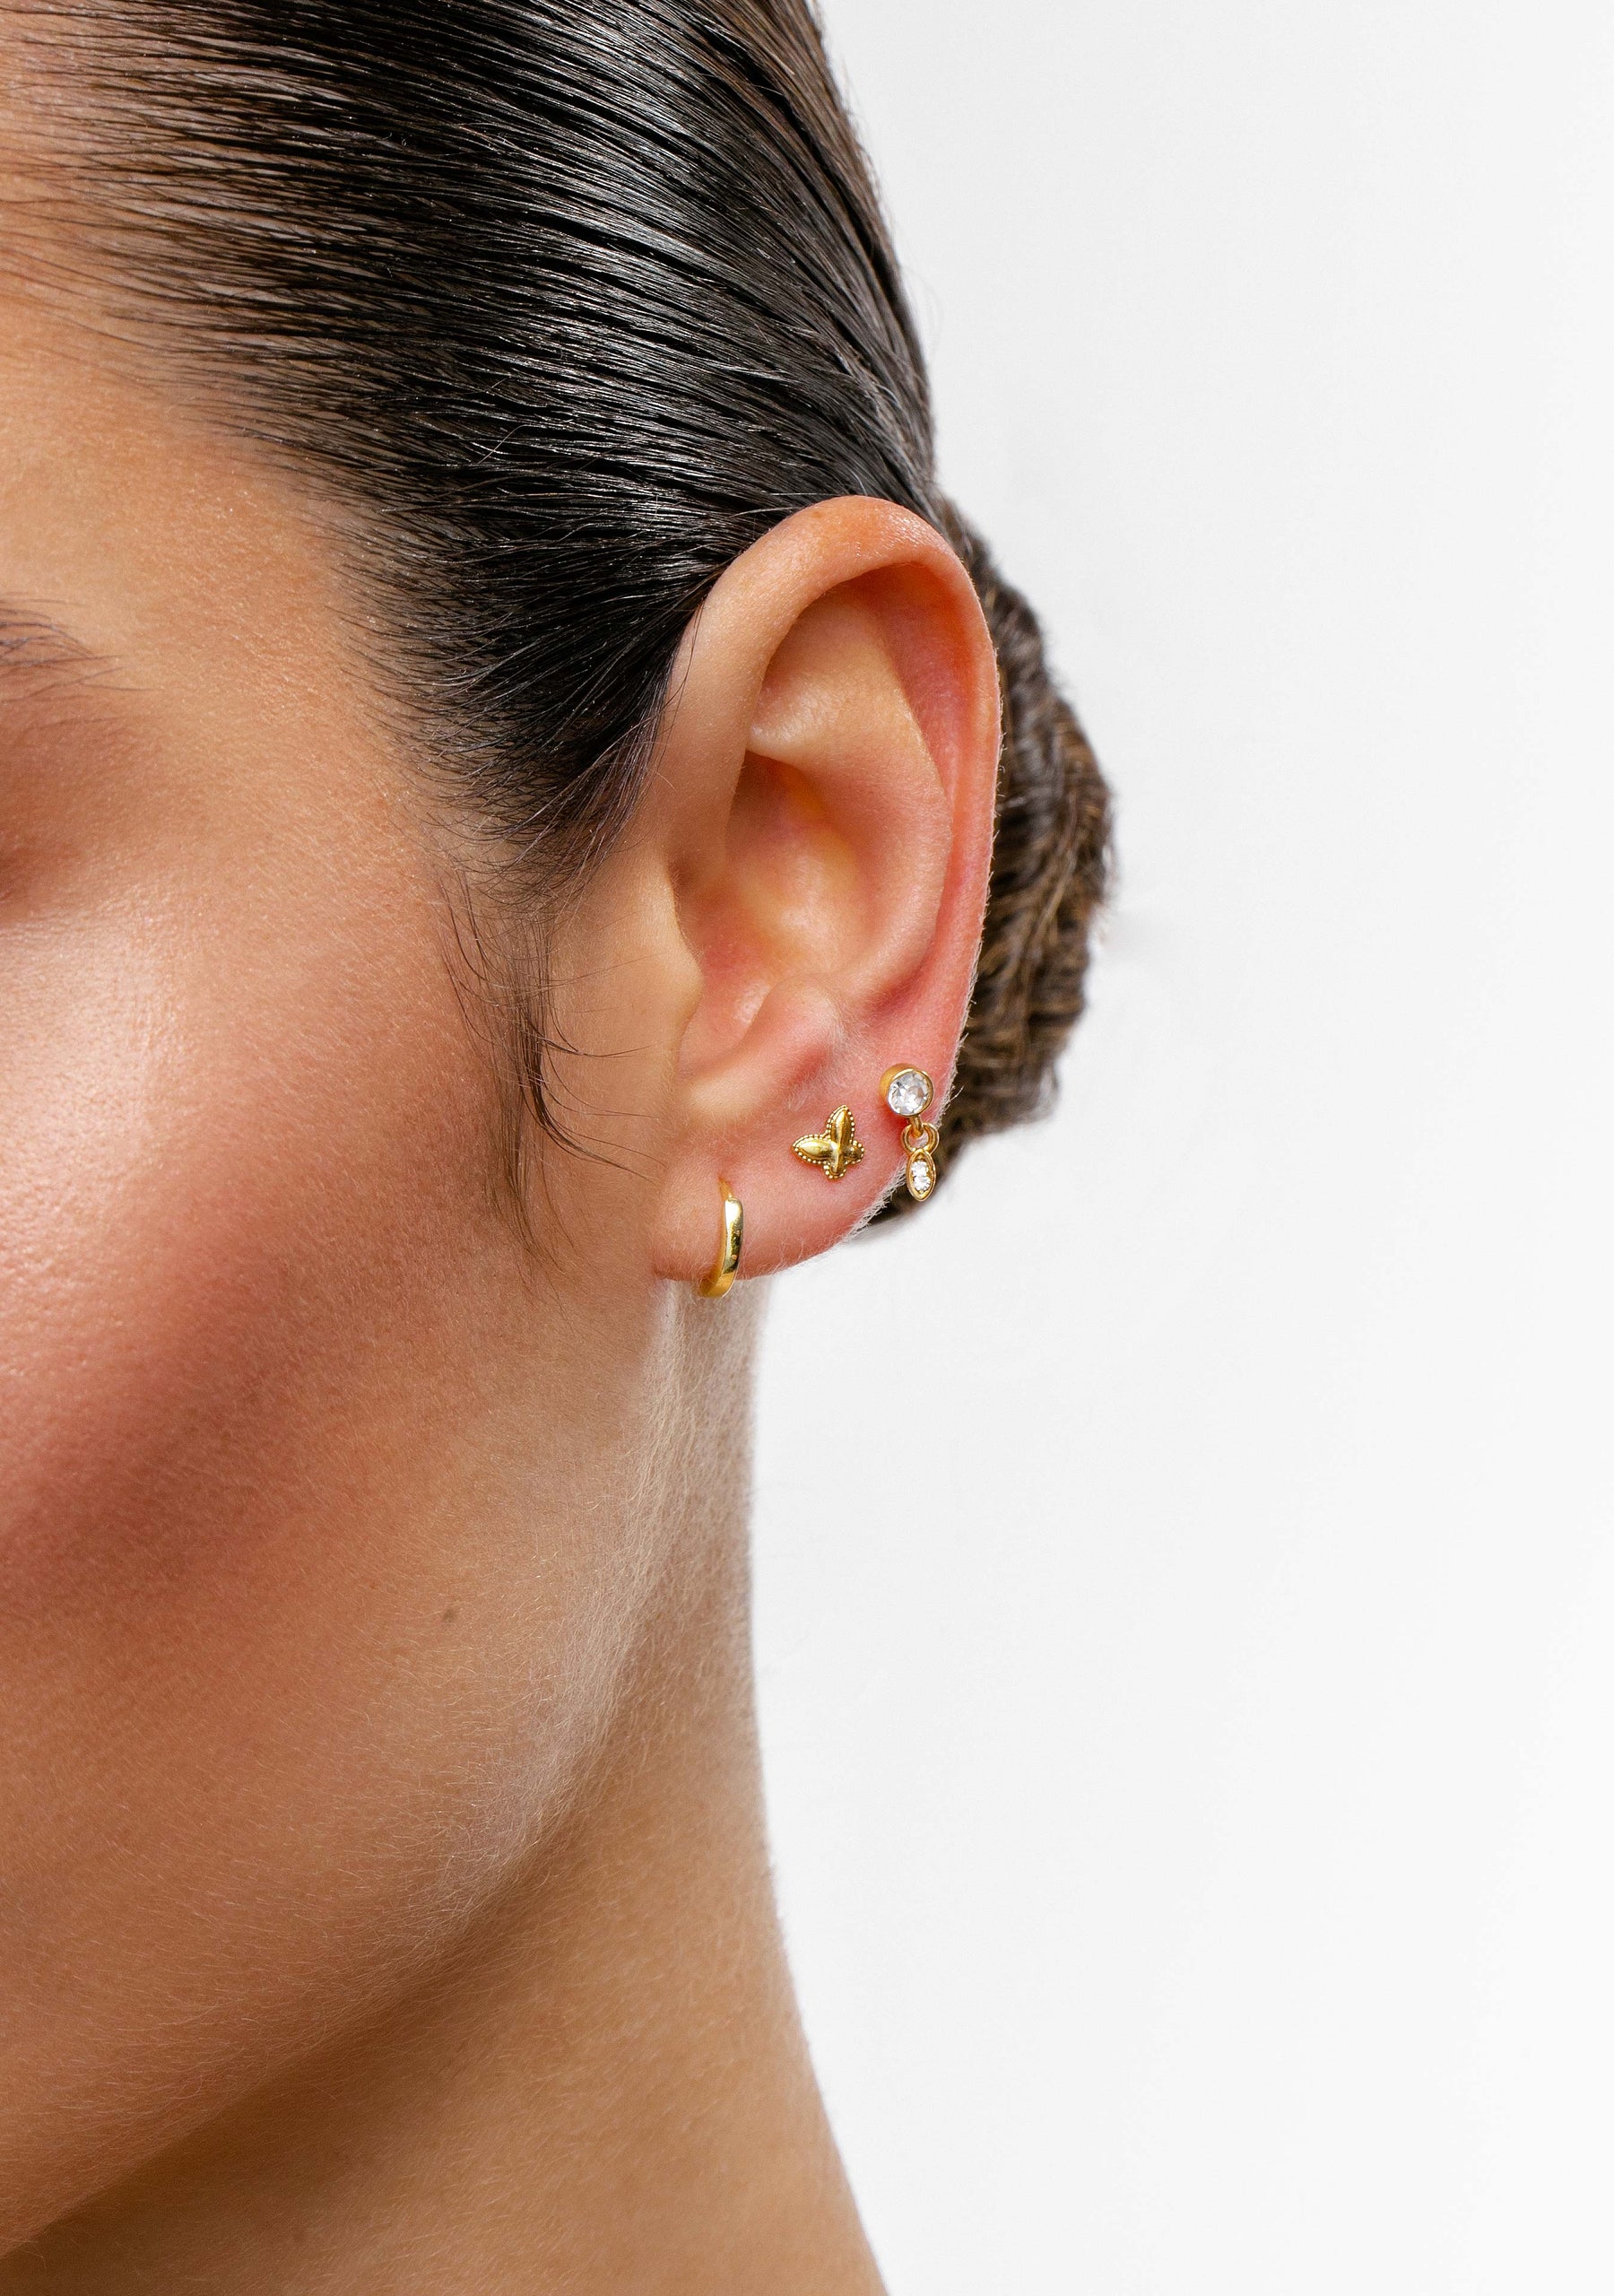 Ear Piercing Zendaya Gold